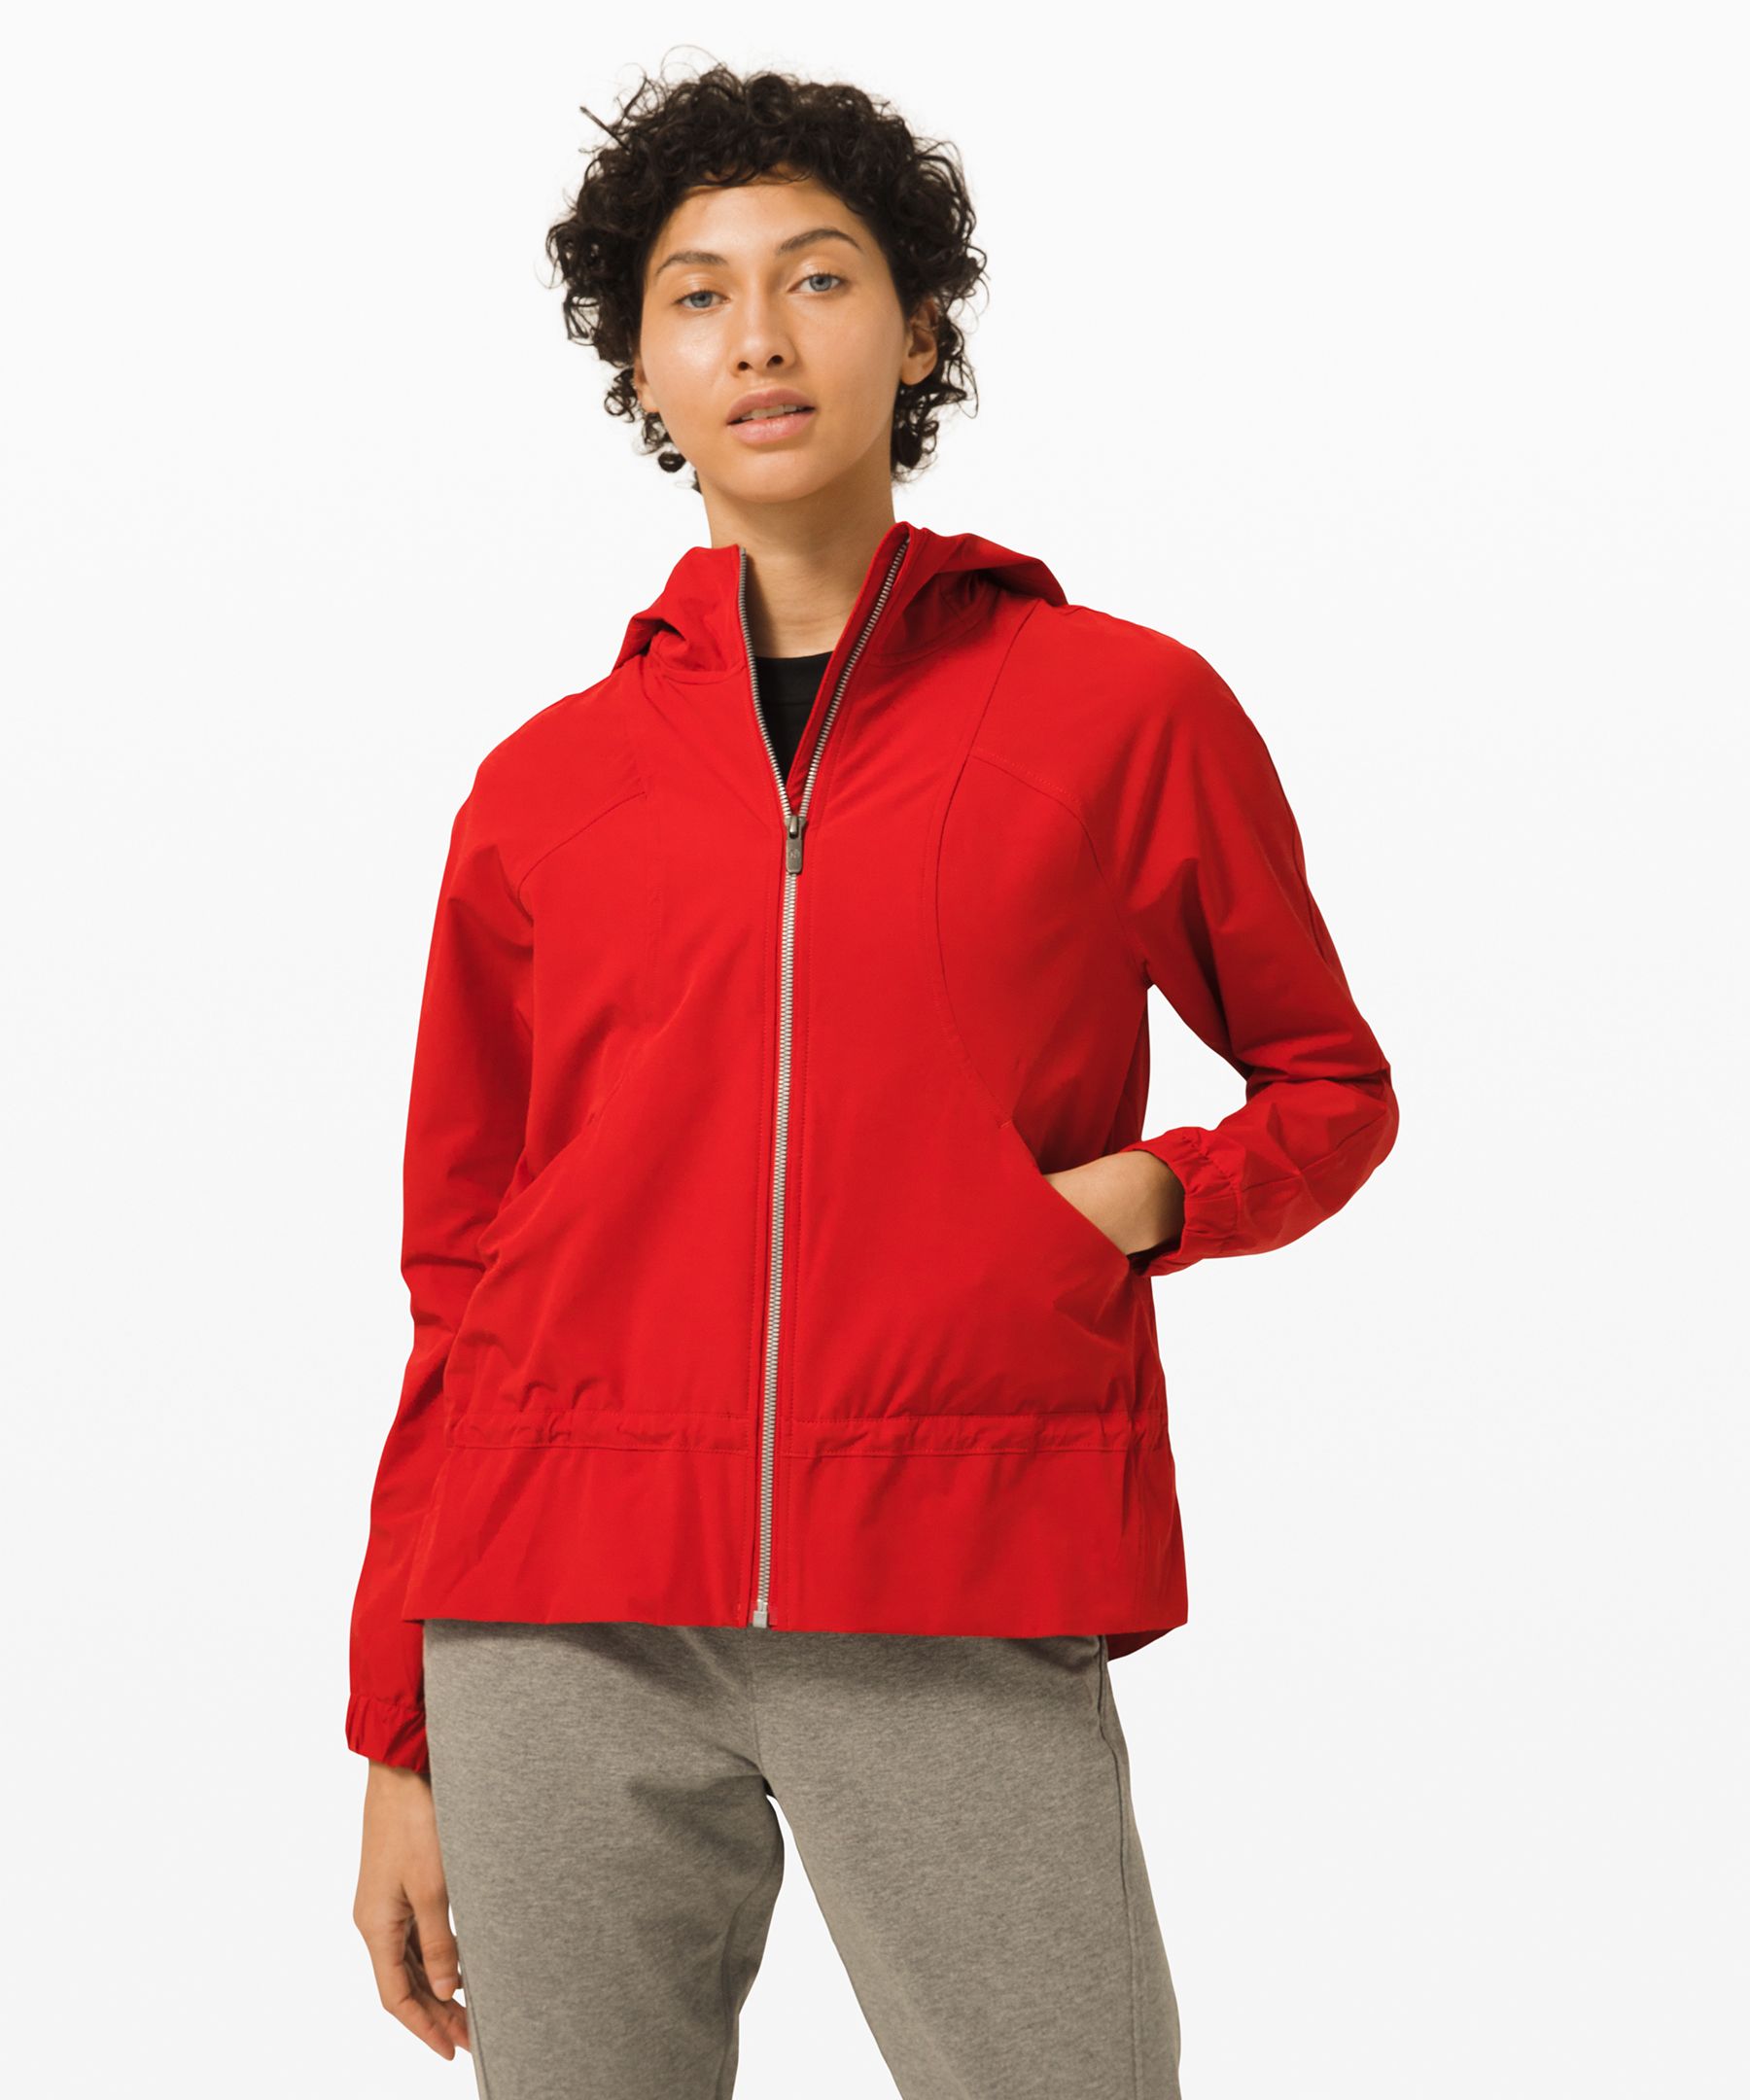 red lululemon jacket